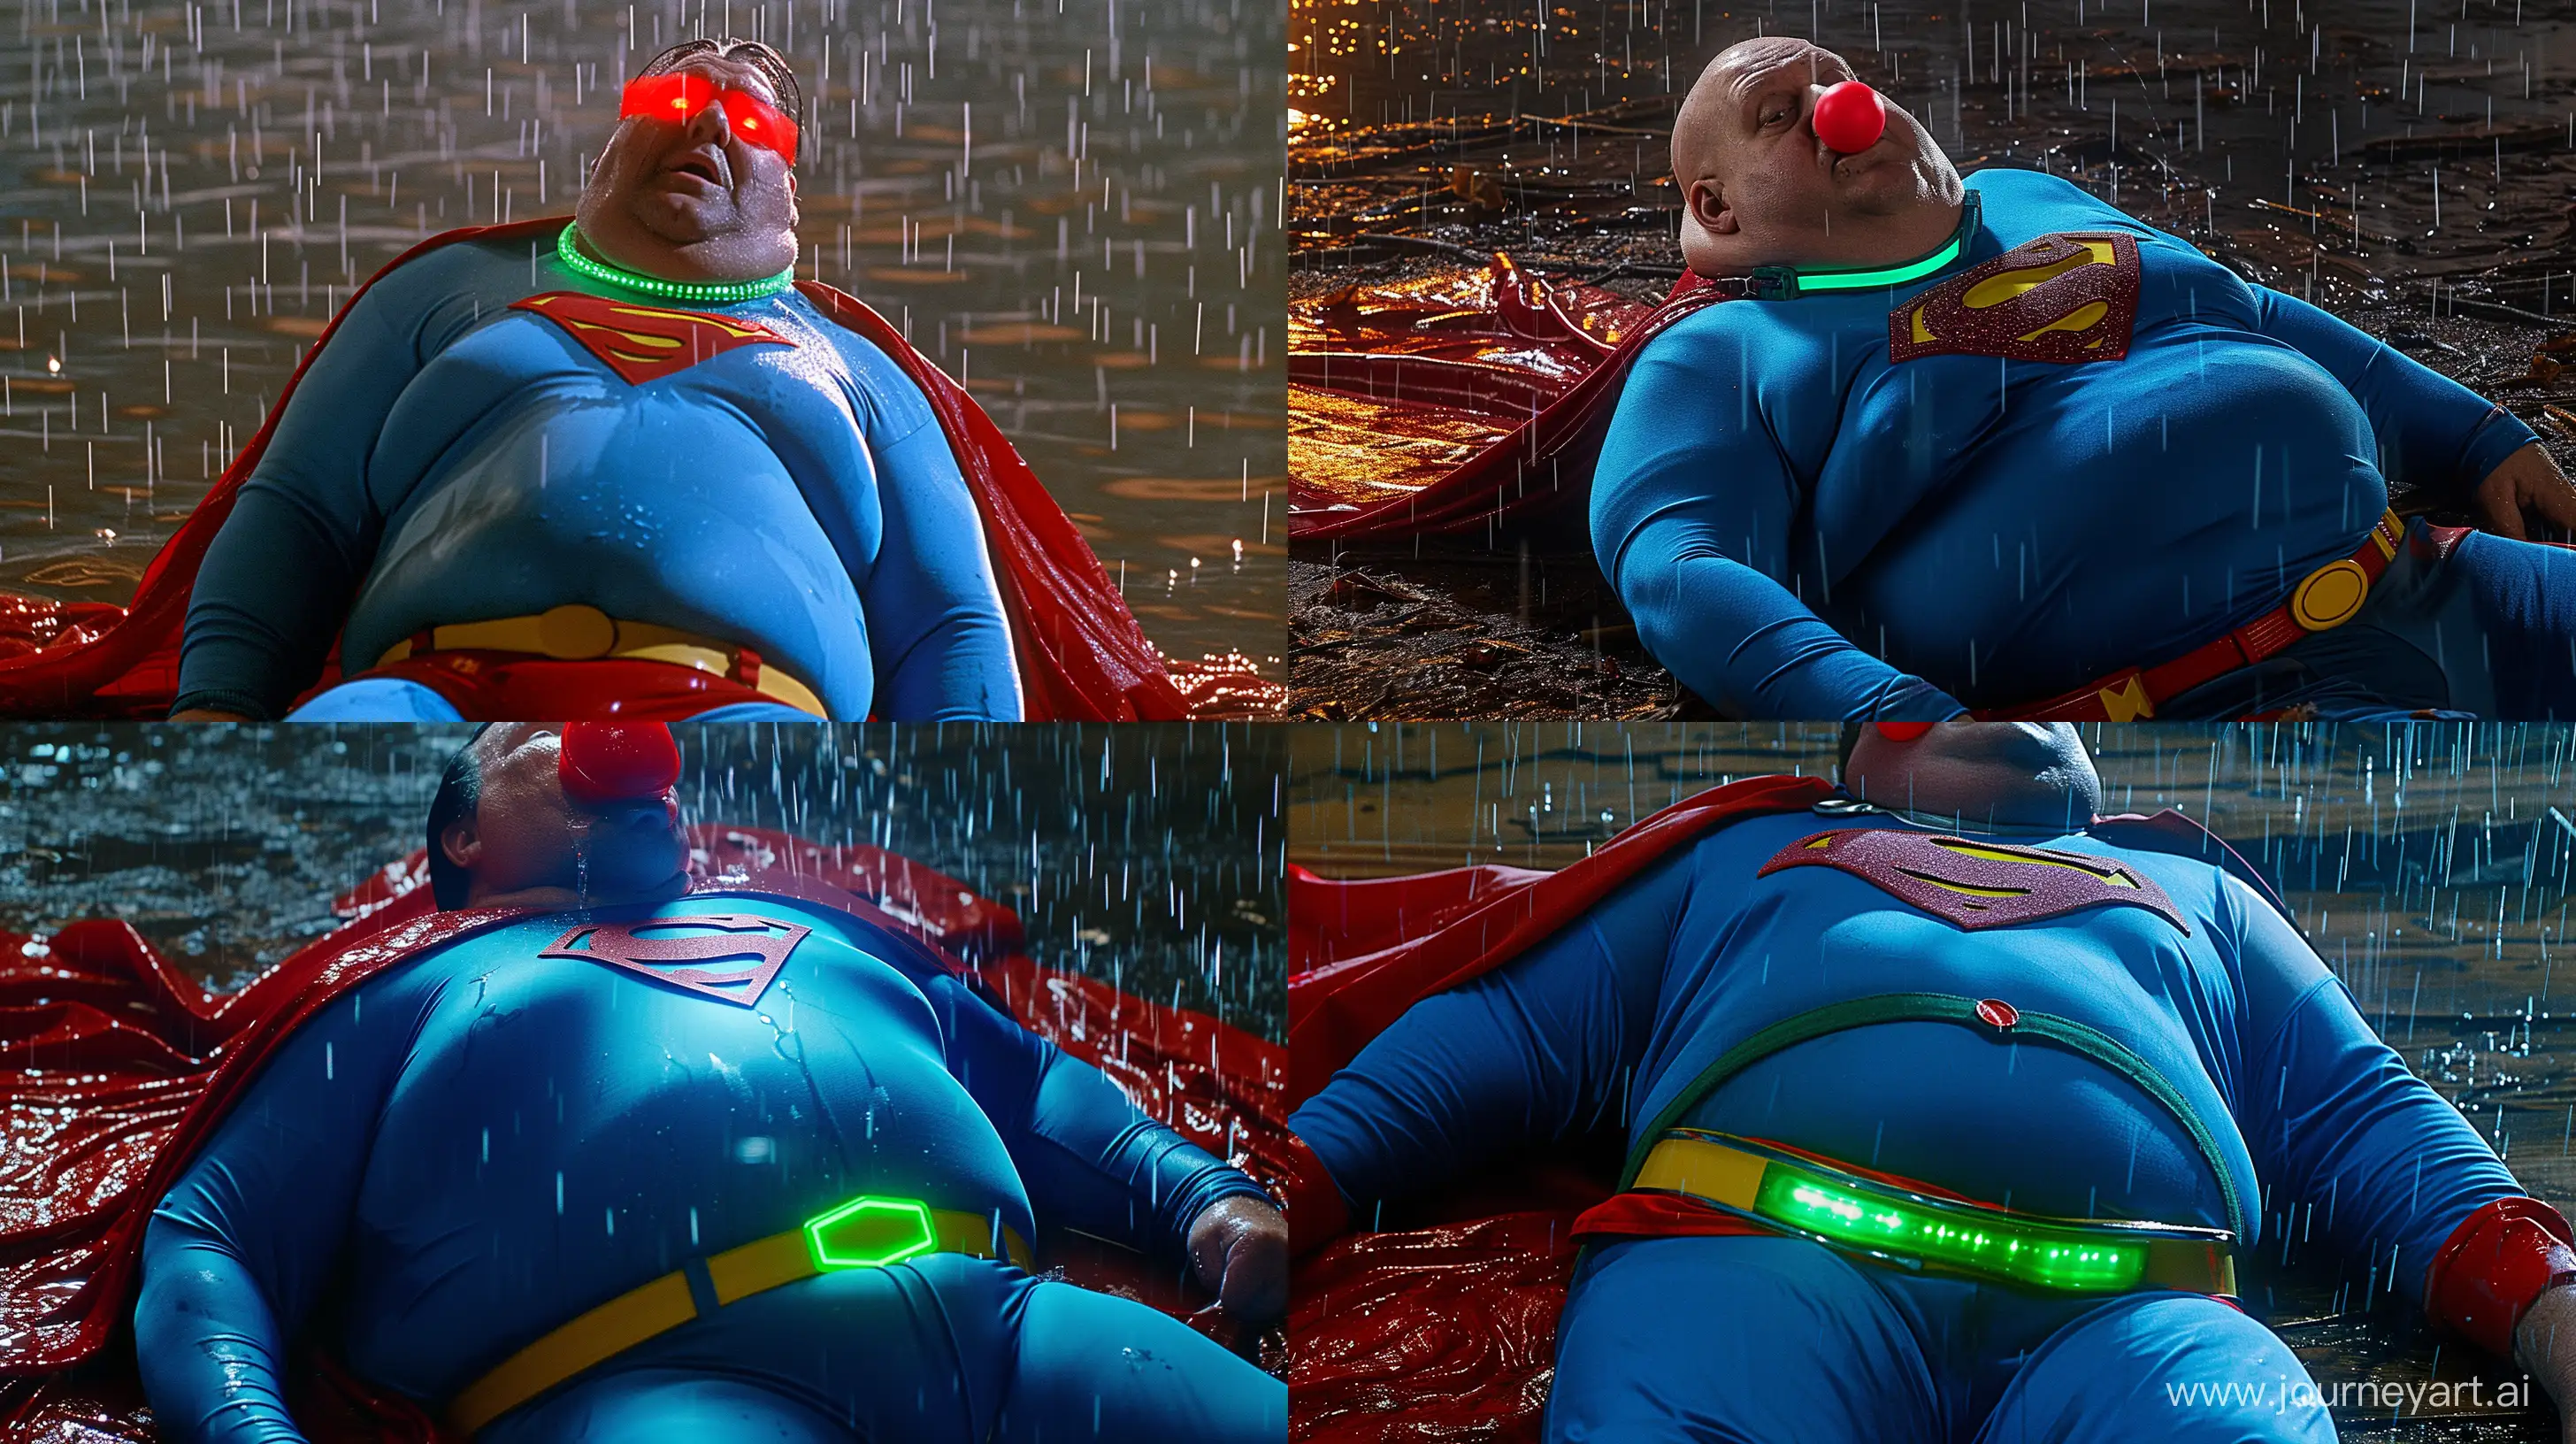 Eccentric-1978-Superman-in-the-Rain-Vintage-Costume-Neon-Collar-and-a-Quirky-Twist